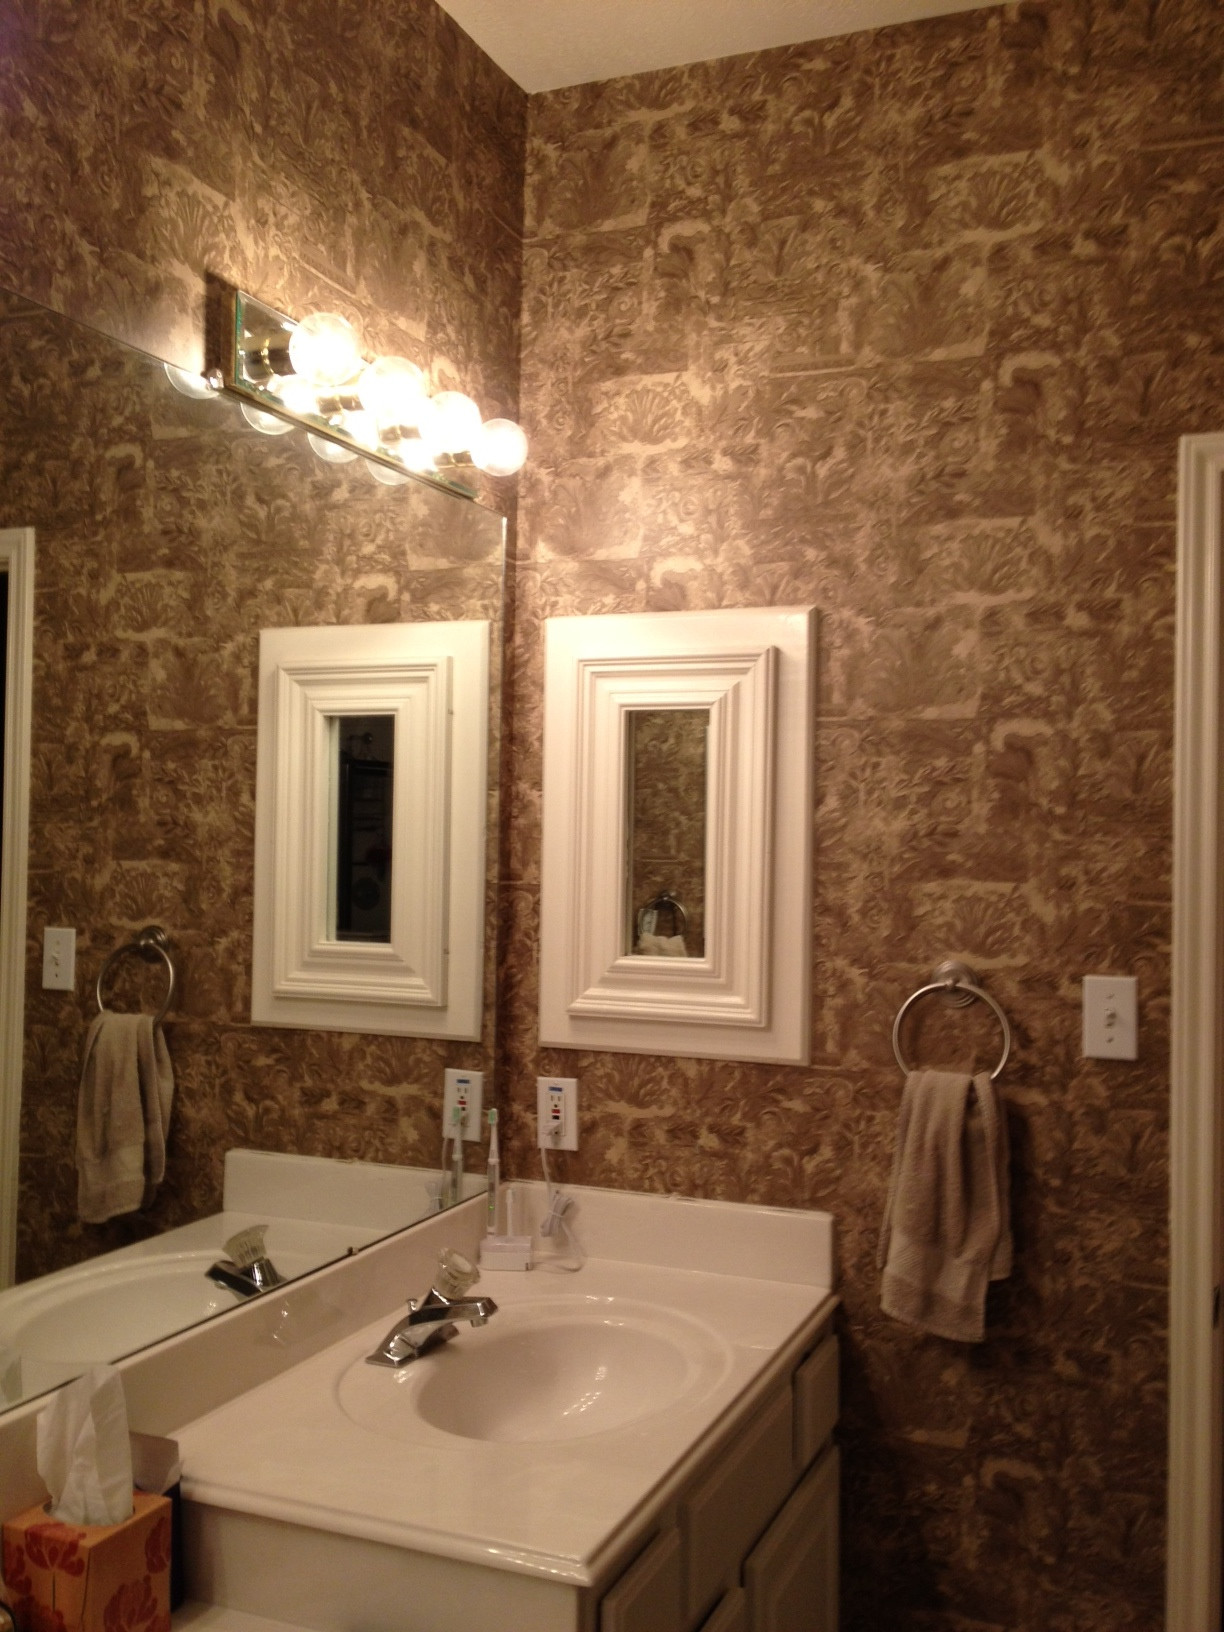 Wallpaper For Bathroom Walls
 Master bathroom wallpaper HELP vinyl paint sand color